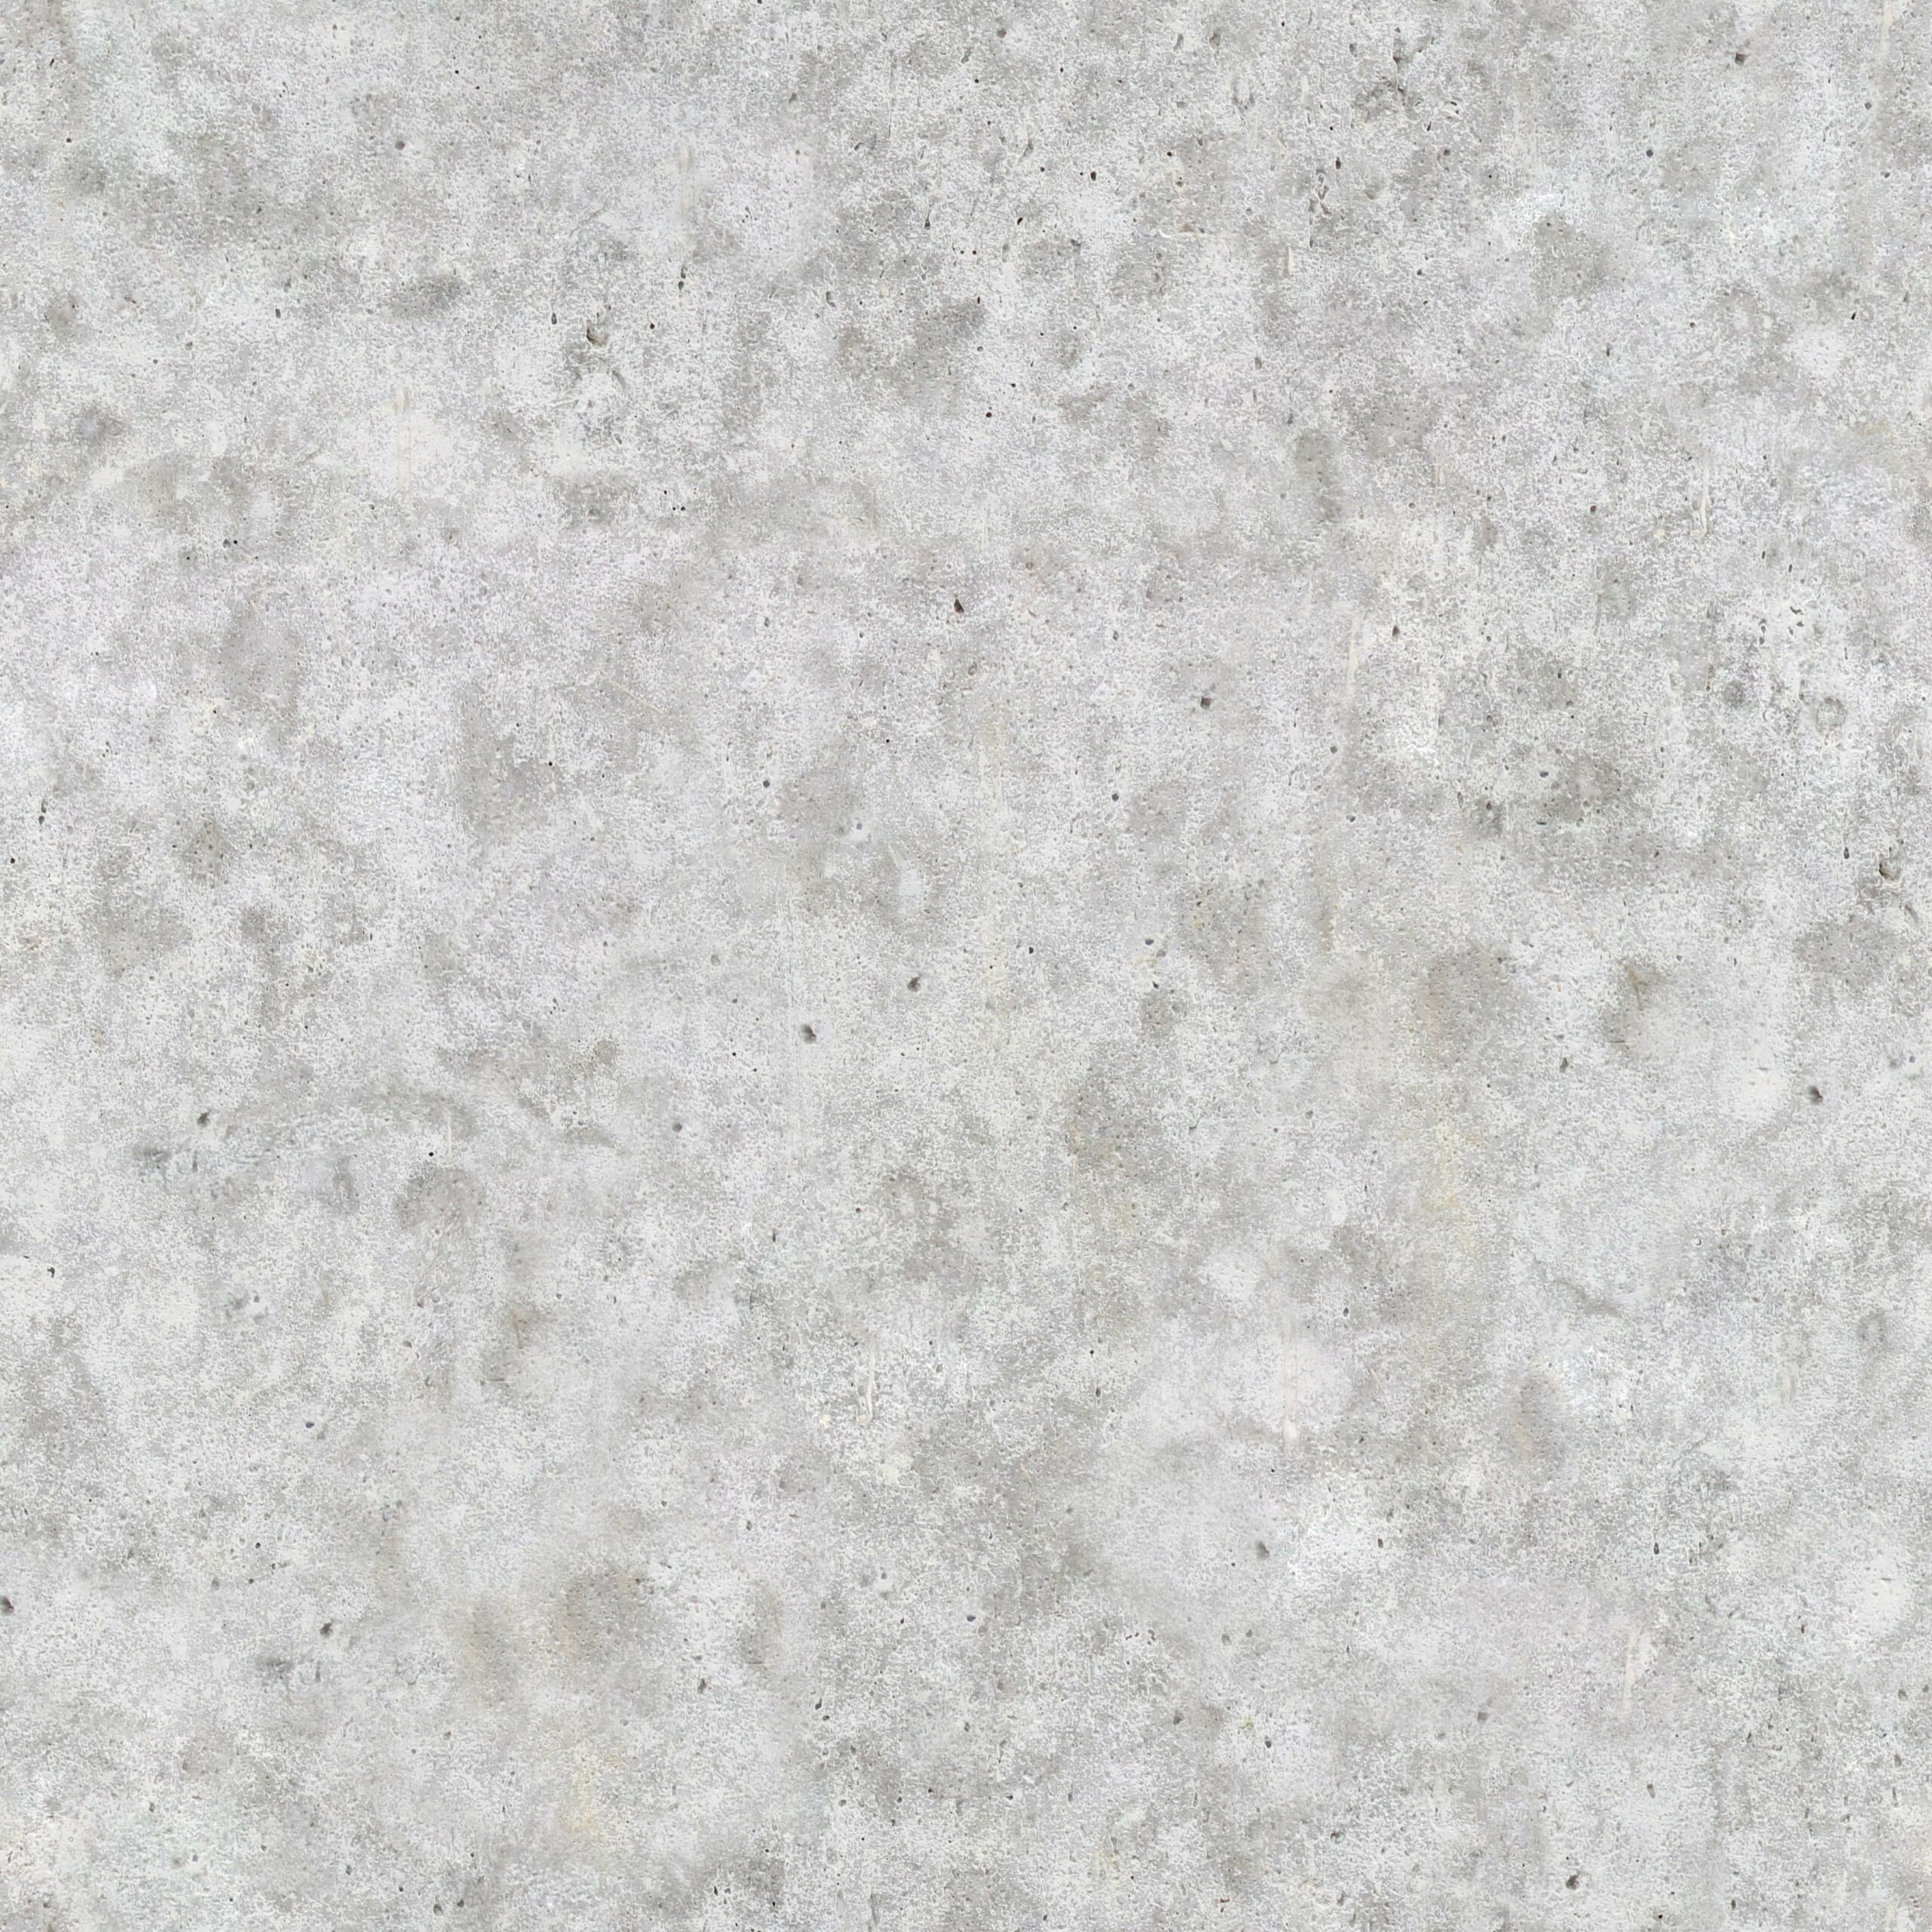 3 Free Seamless Concrete Wall Textures (JPG)